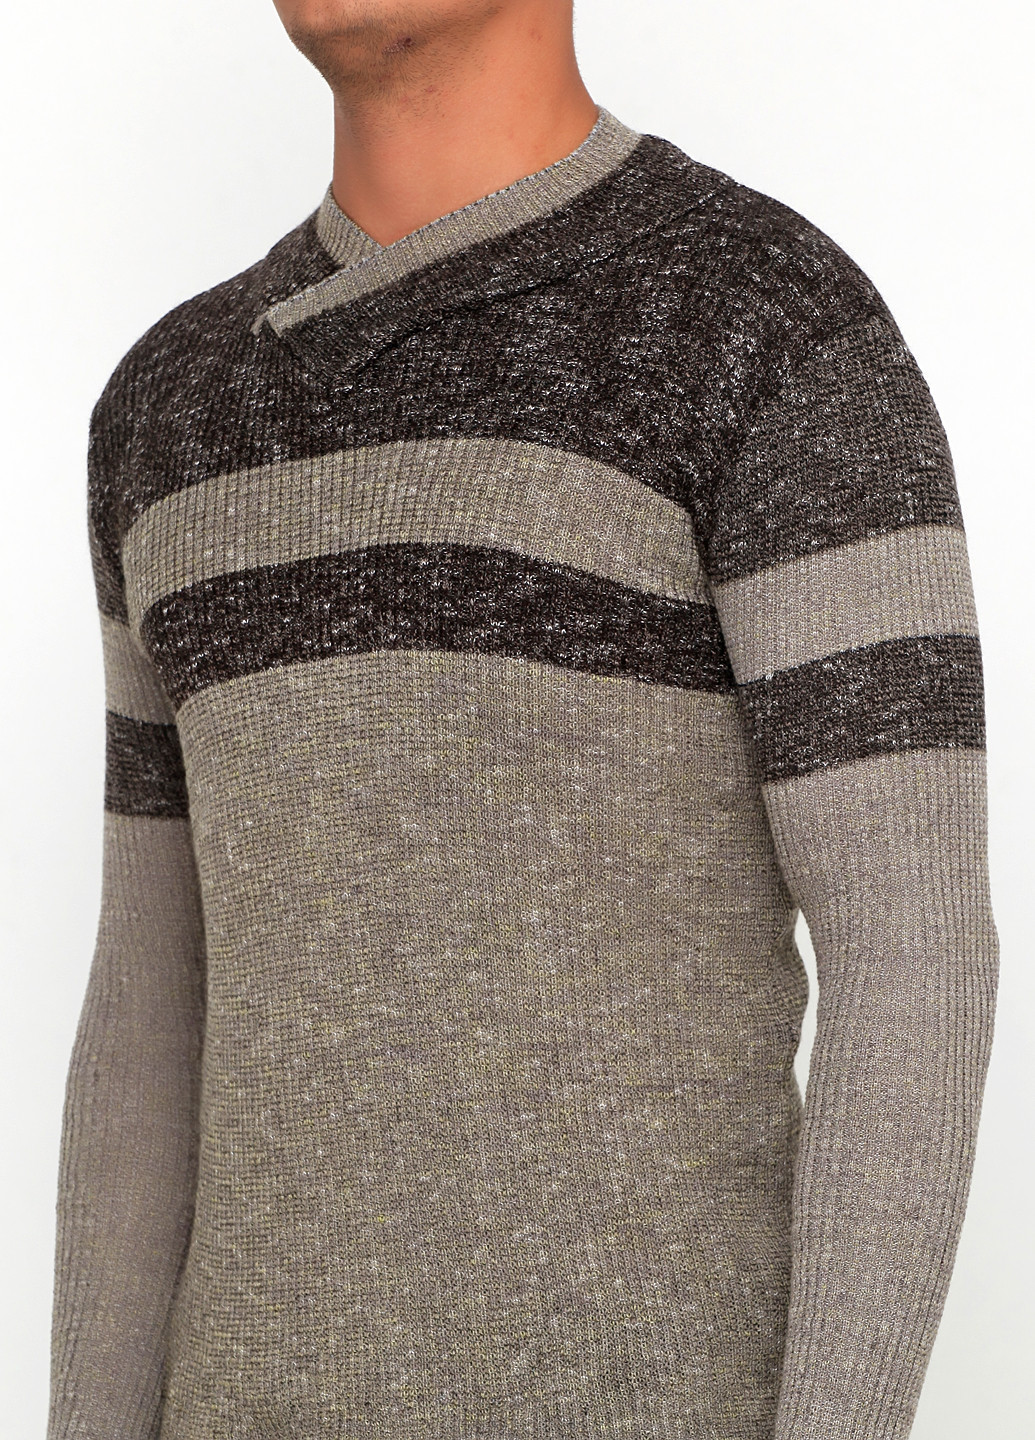 Коричневый демисезонный пуловер пуловер Wintage